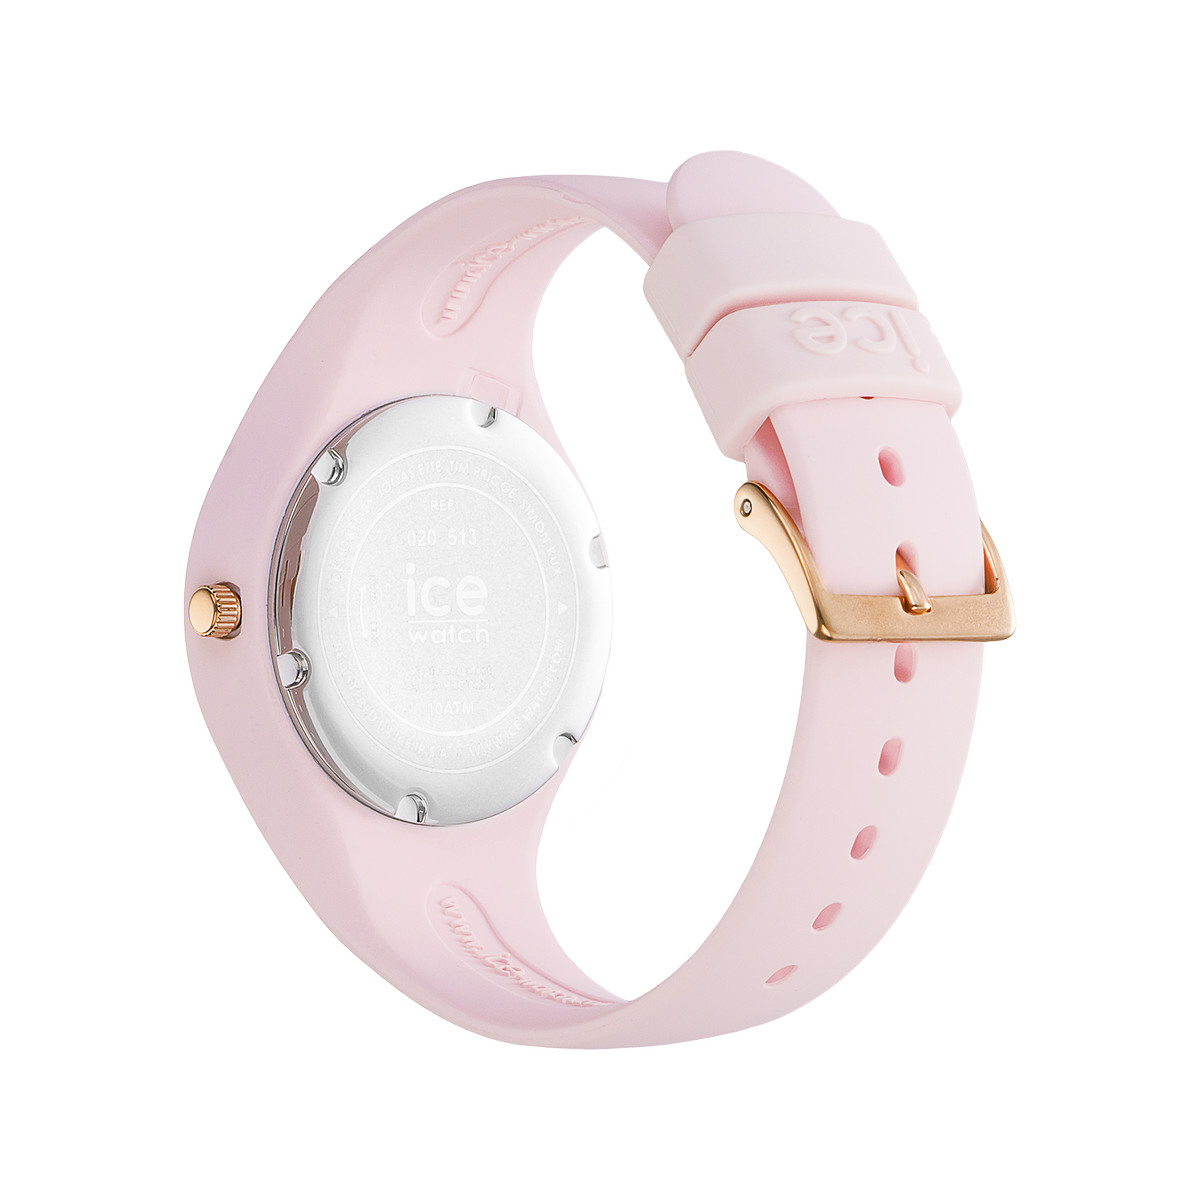 Montre Ice Watch femme bracelet silicone rose - vue 3